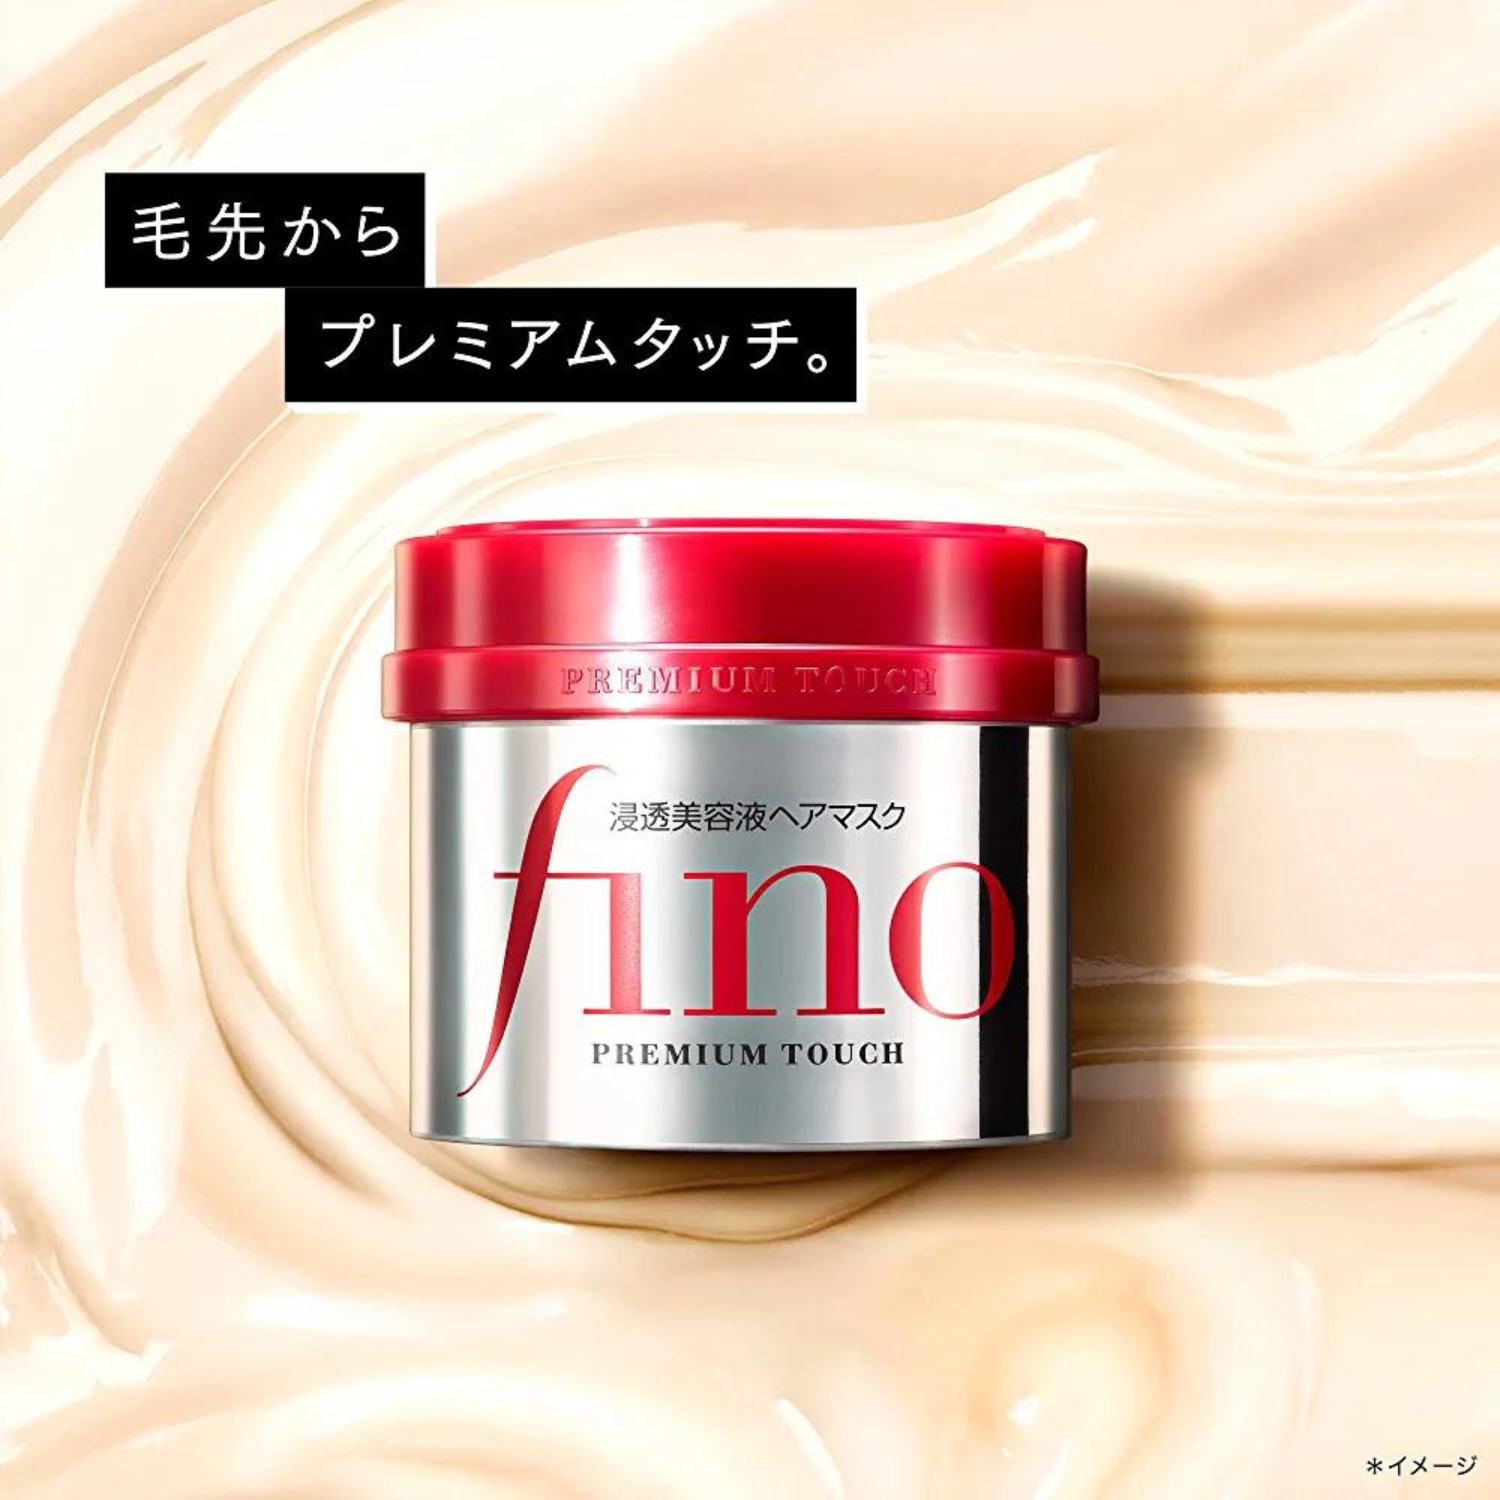 Shiseido Fino Hair Mask Treatment 230g - Buy Me Japan